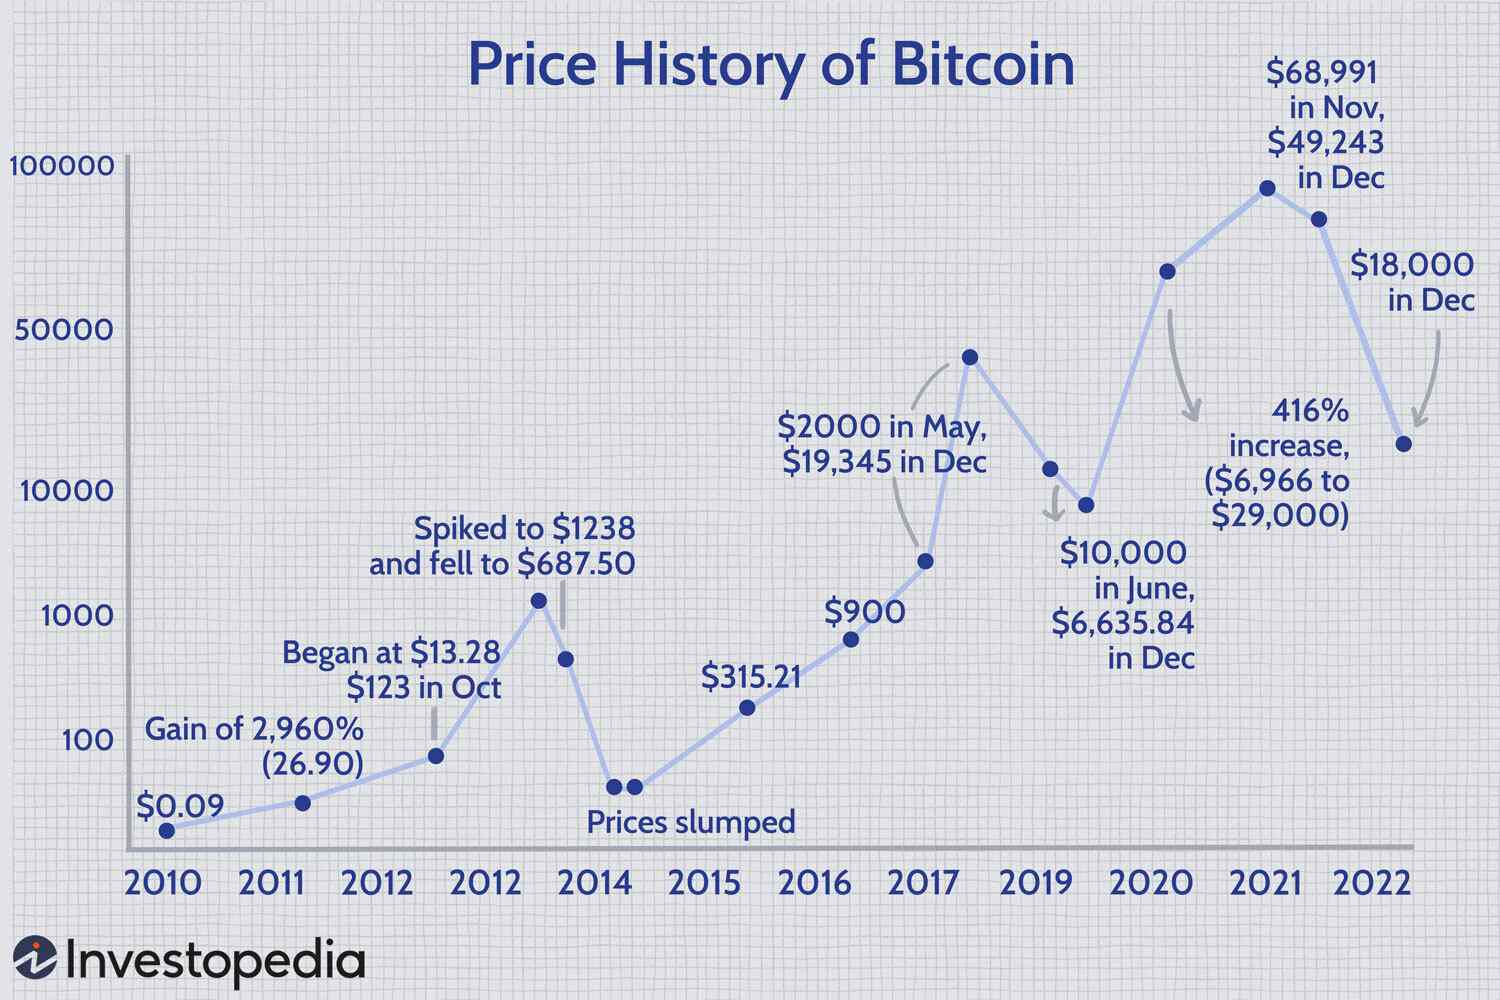 Bitcoin Price History - Source: Investopedia